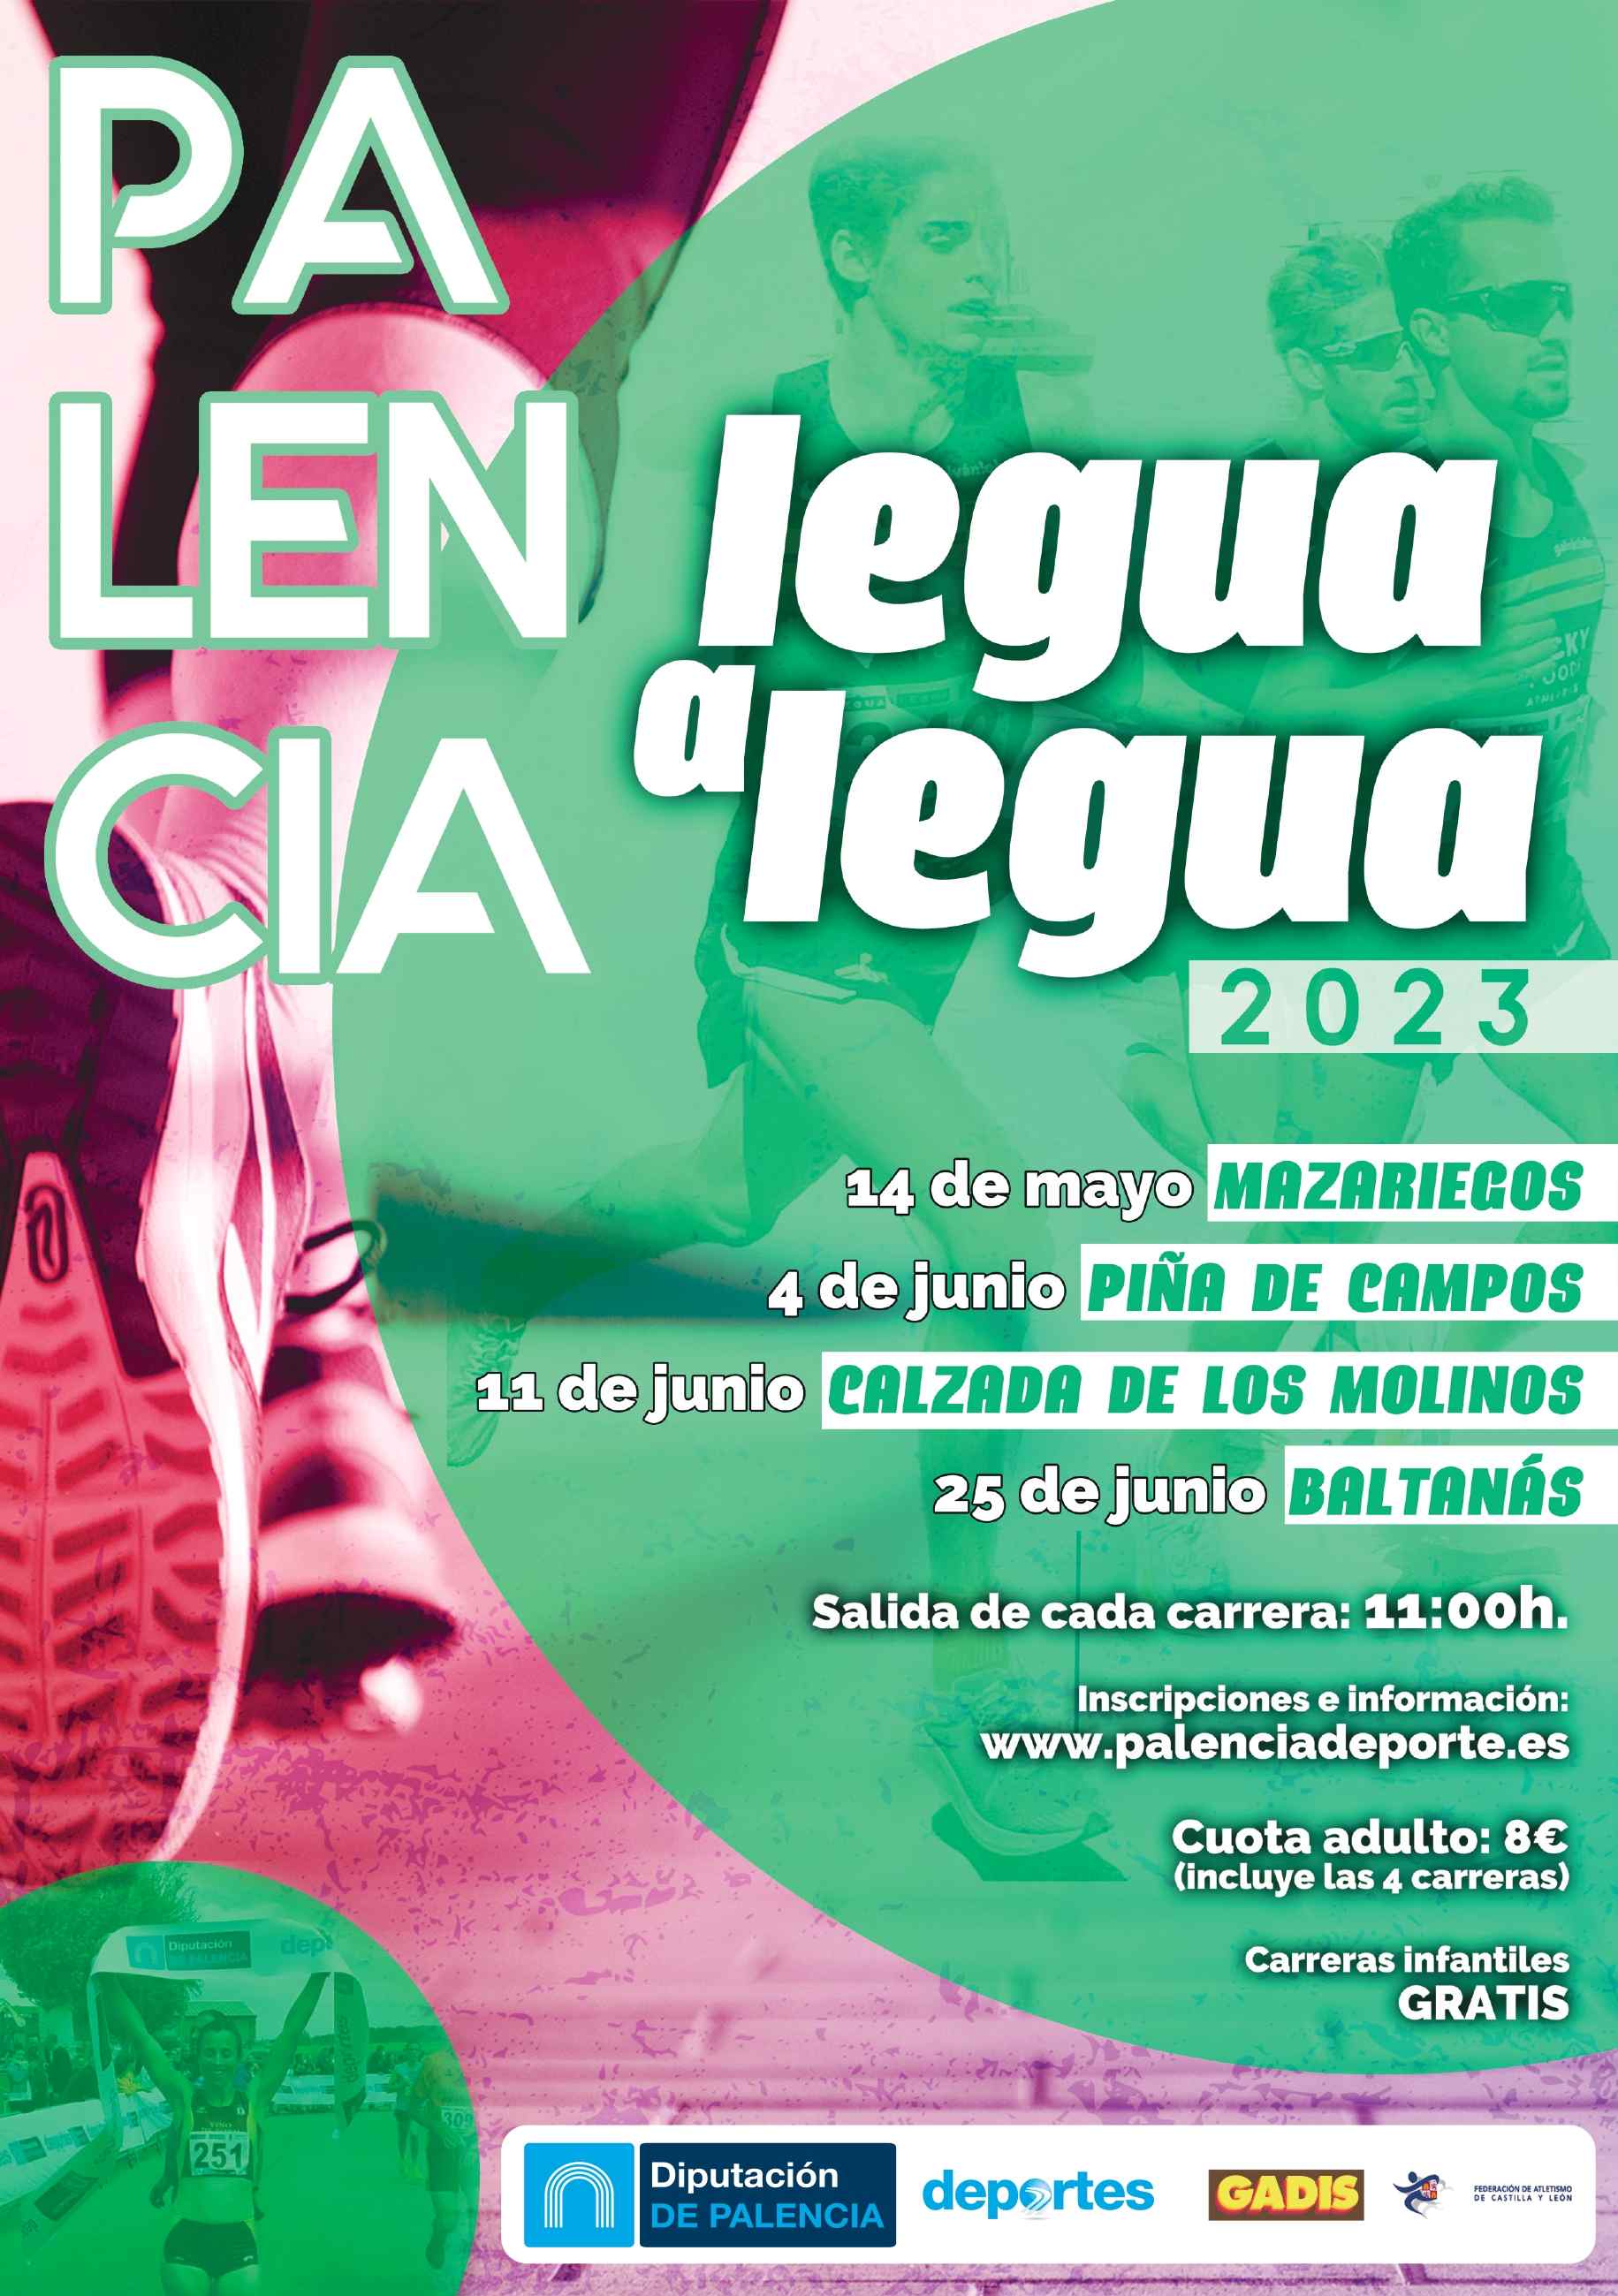 CALZADA DE LOS MOLINOS PALENCIA LEGUA A LEGUA 2023 - Inscríbete